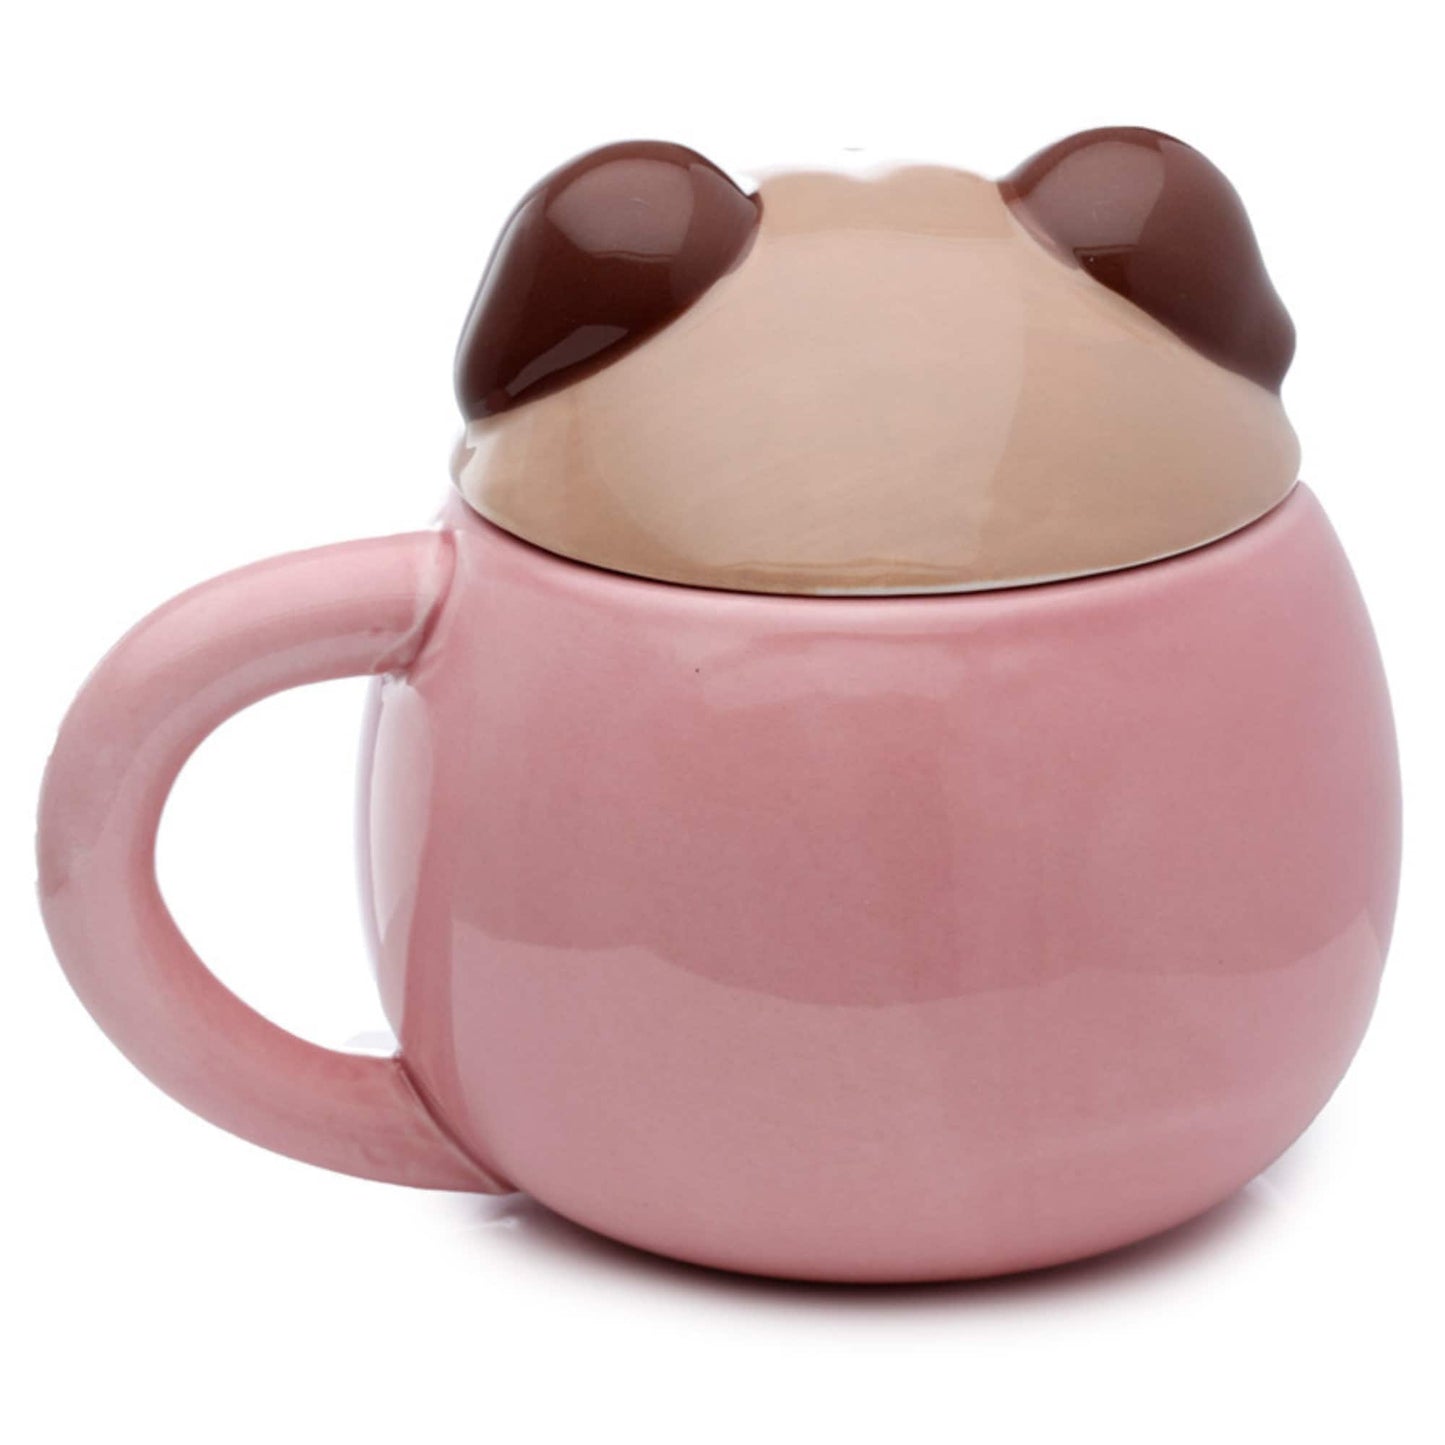 Pug Lidded Mug, Cute Novelty Ceramic Dog Mug, Animal Mug, Dog Lover Gift Mug, Pug Present, Fun Peeping Pug Lidded Mug